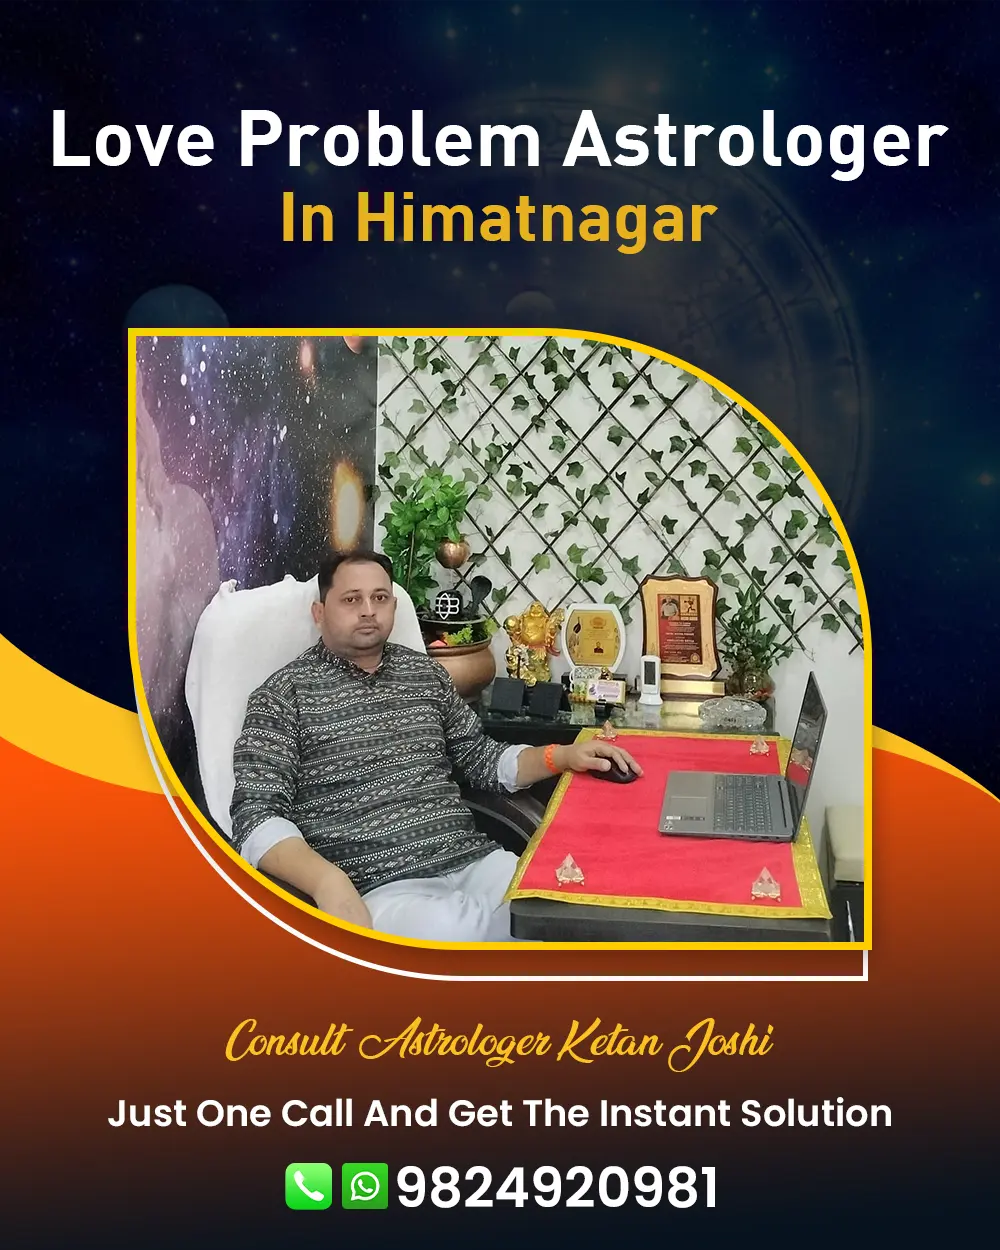 Love Problem Astrologer In Himatnagar